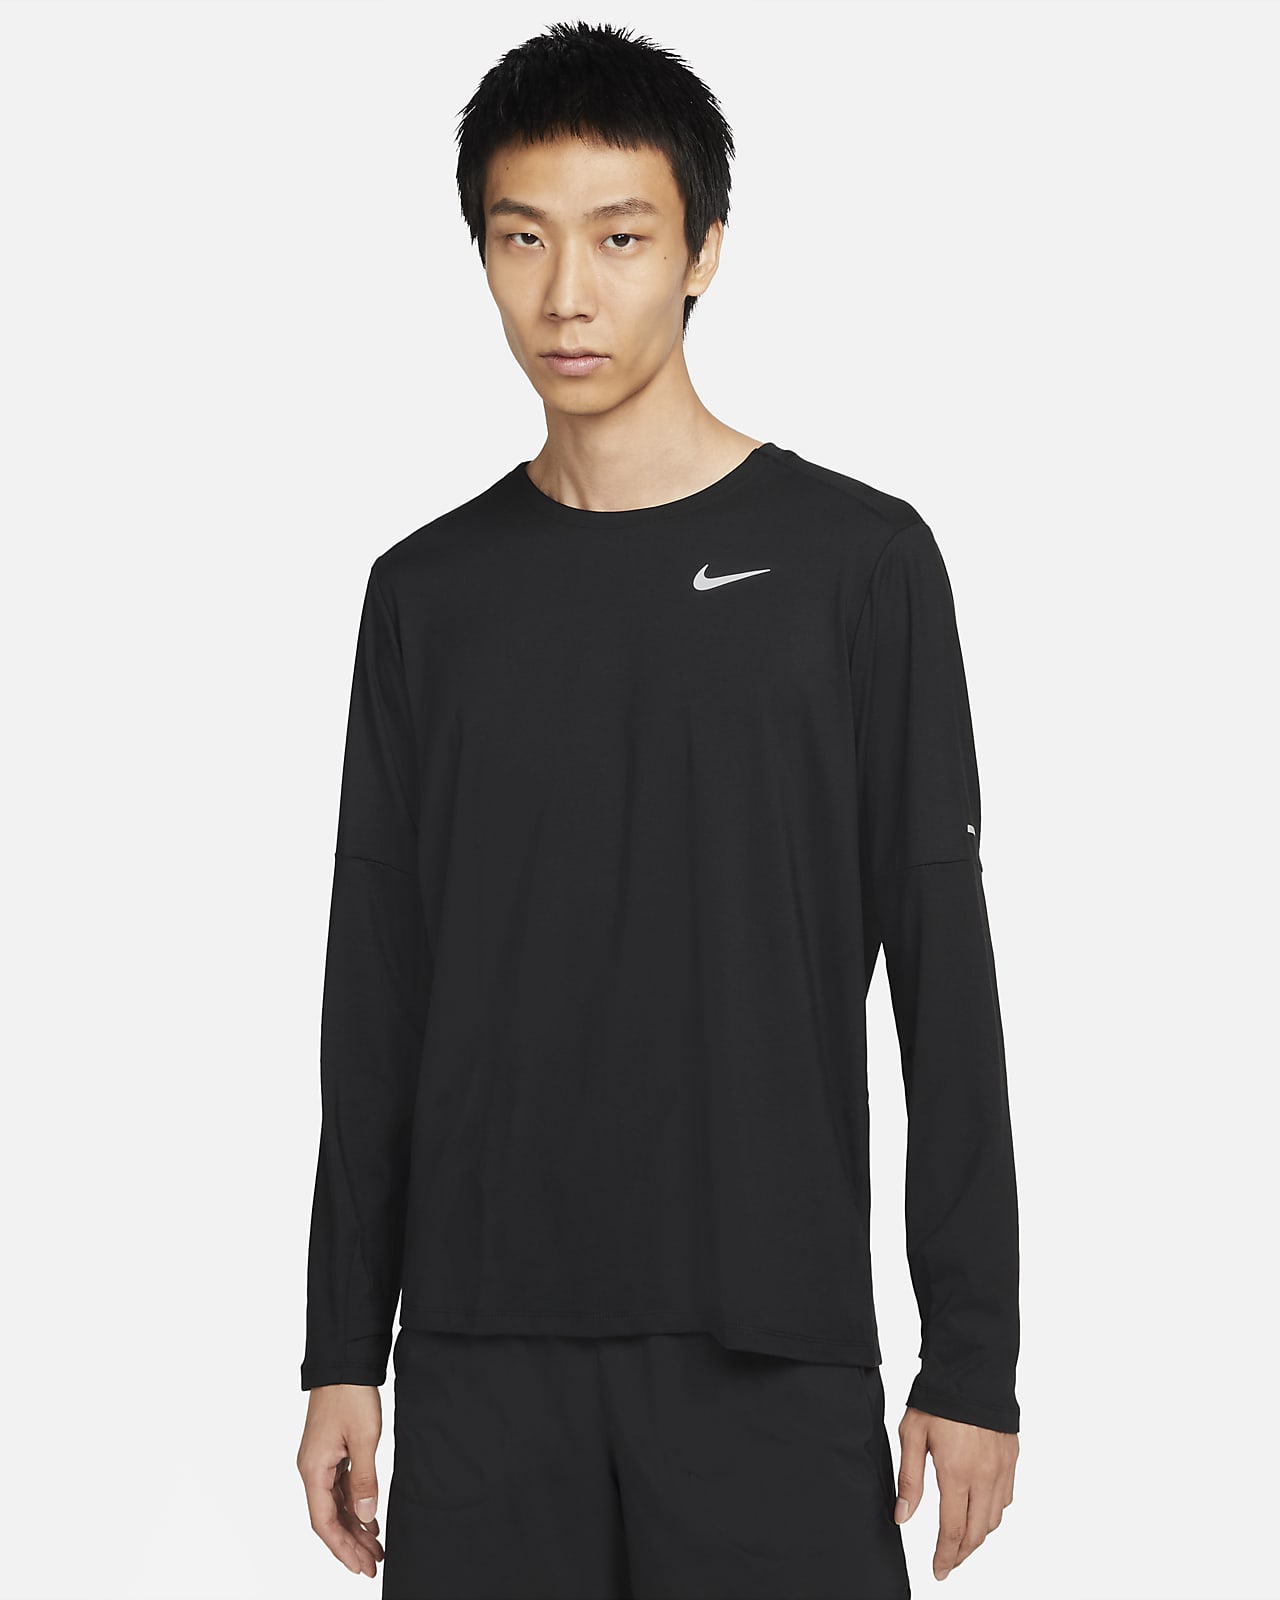 Nike Dri-FIT Element 男子防晒速干跑步圆领上衣